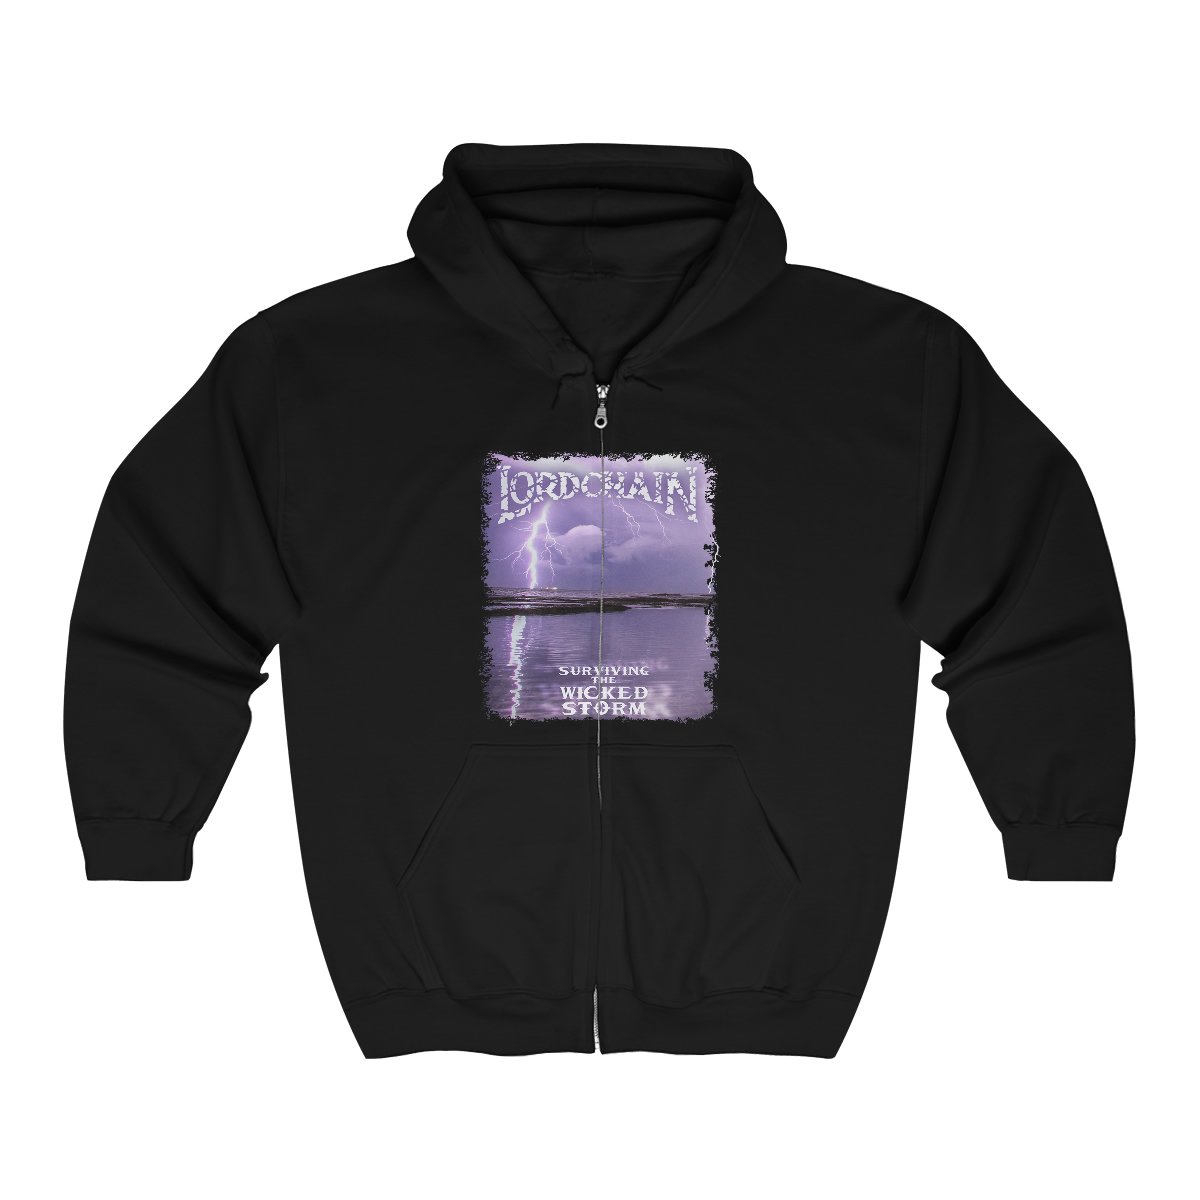 Lordchain – Surviving The Wicked Storm Full Zip Hooded Sweatshirt